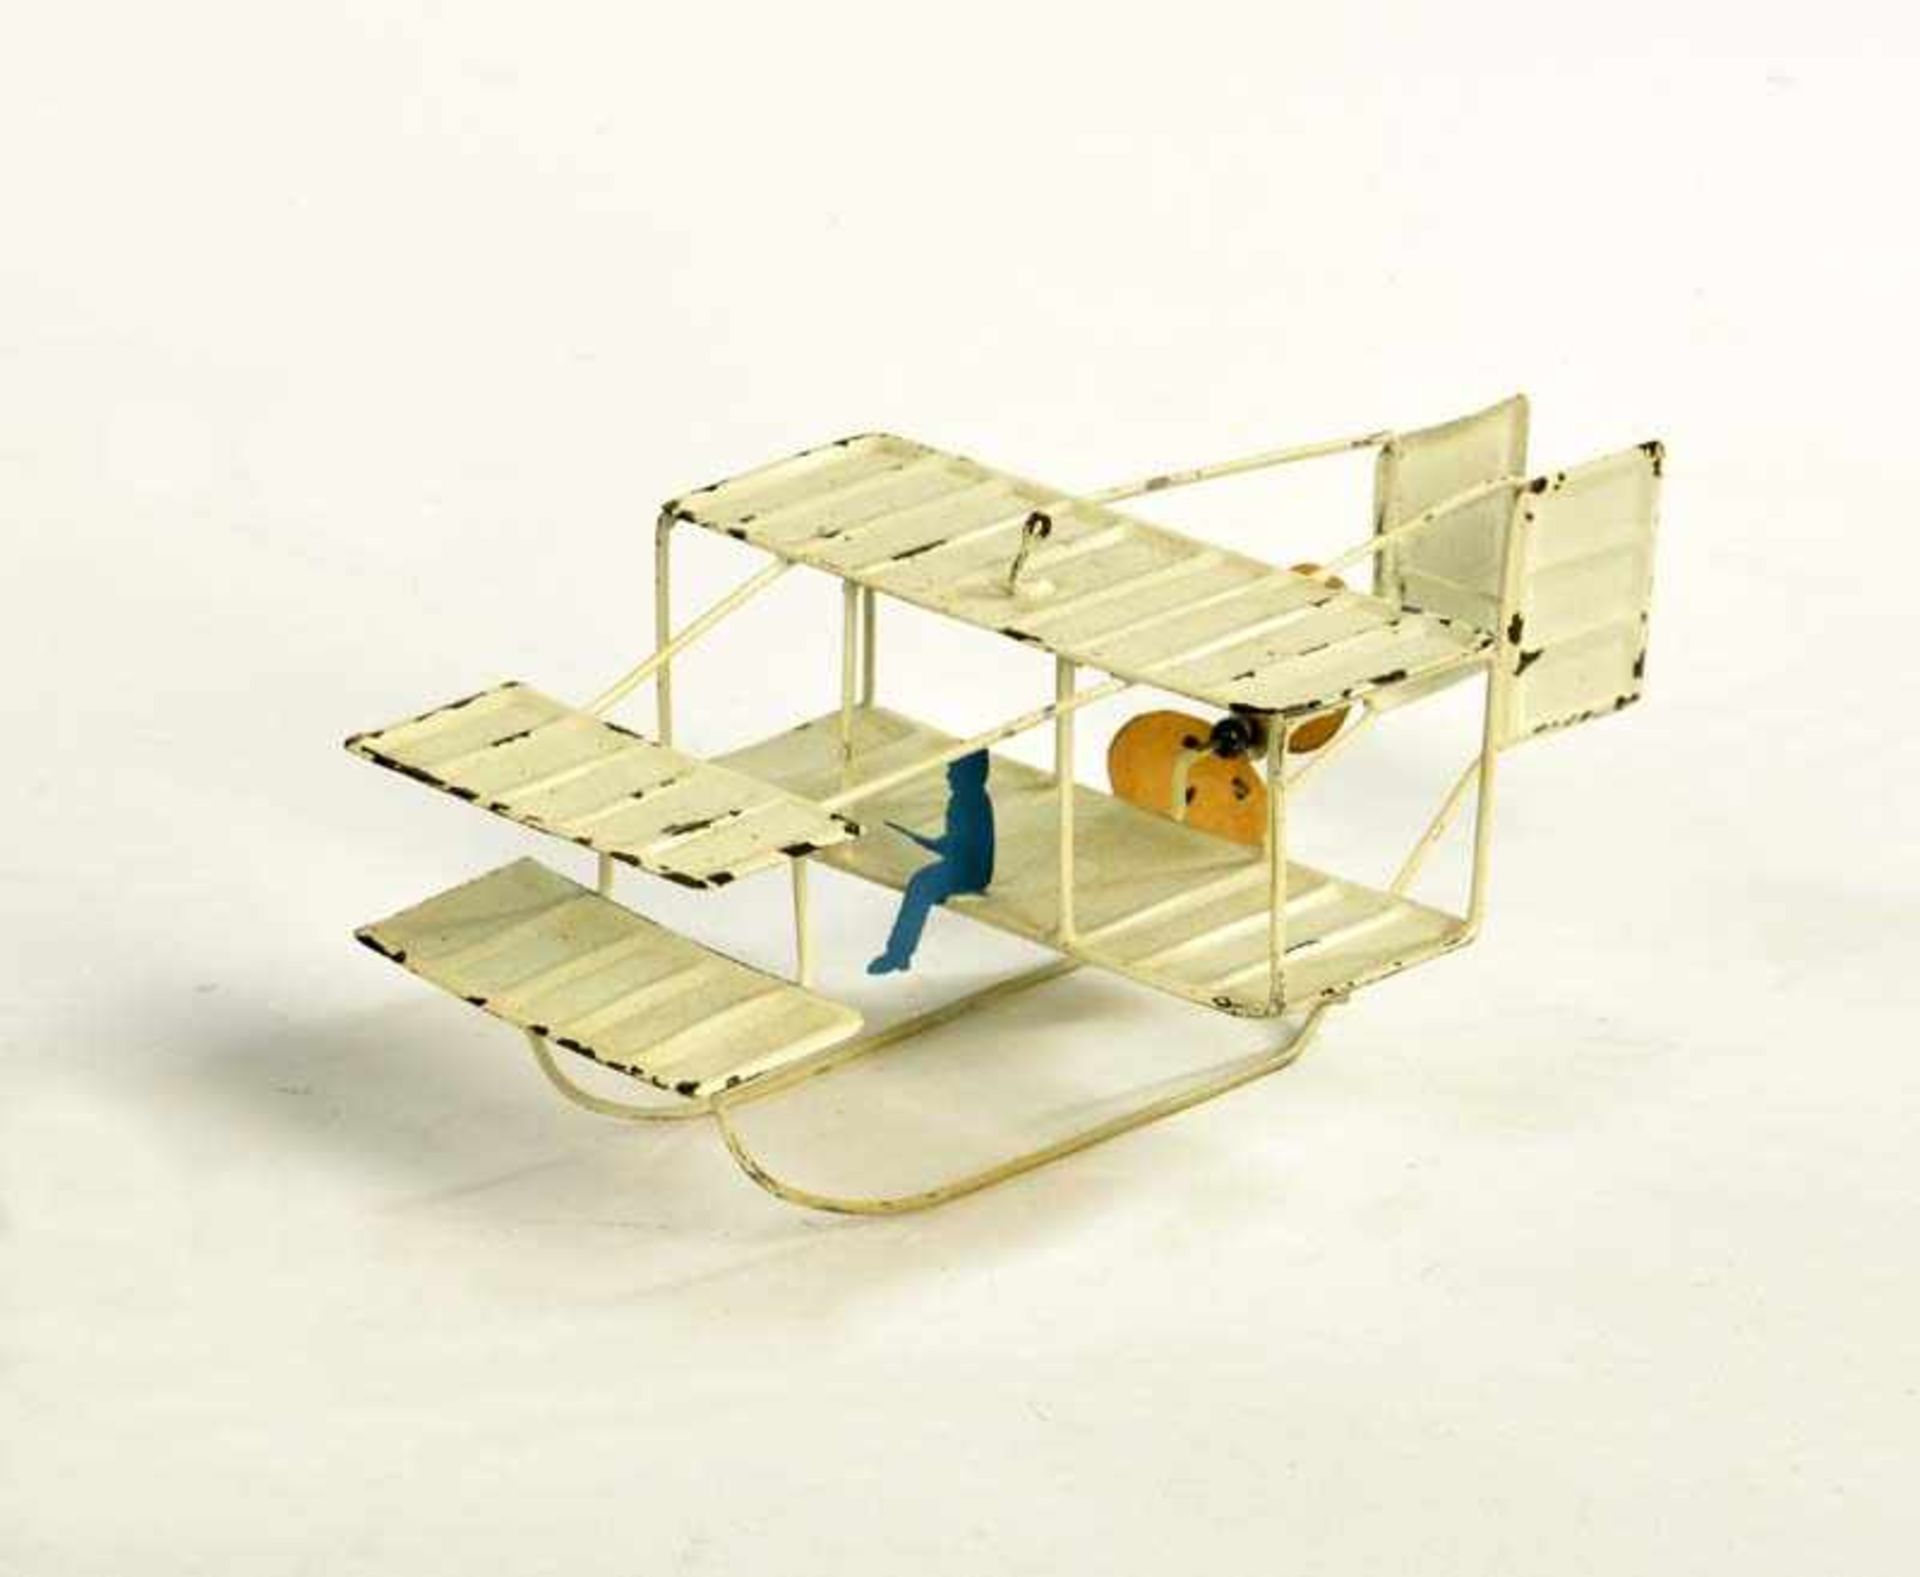 Plank ?, Plane age old, tin, min. piant damagePlank ?, Flugzeug uralt, 18 cm, Blech , min. LM- - -